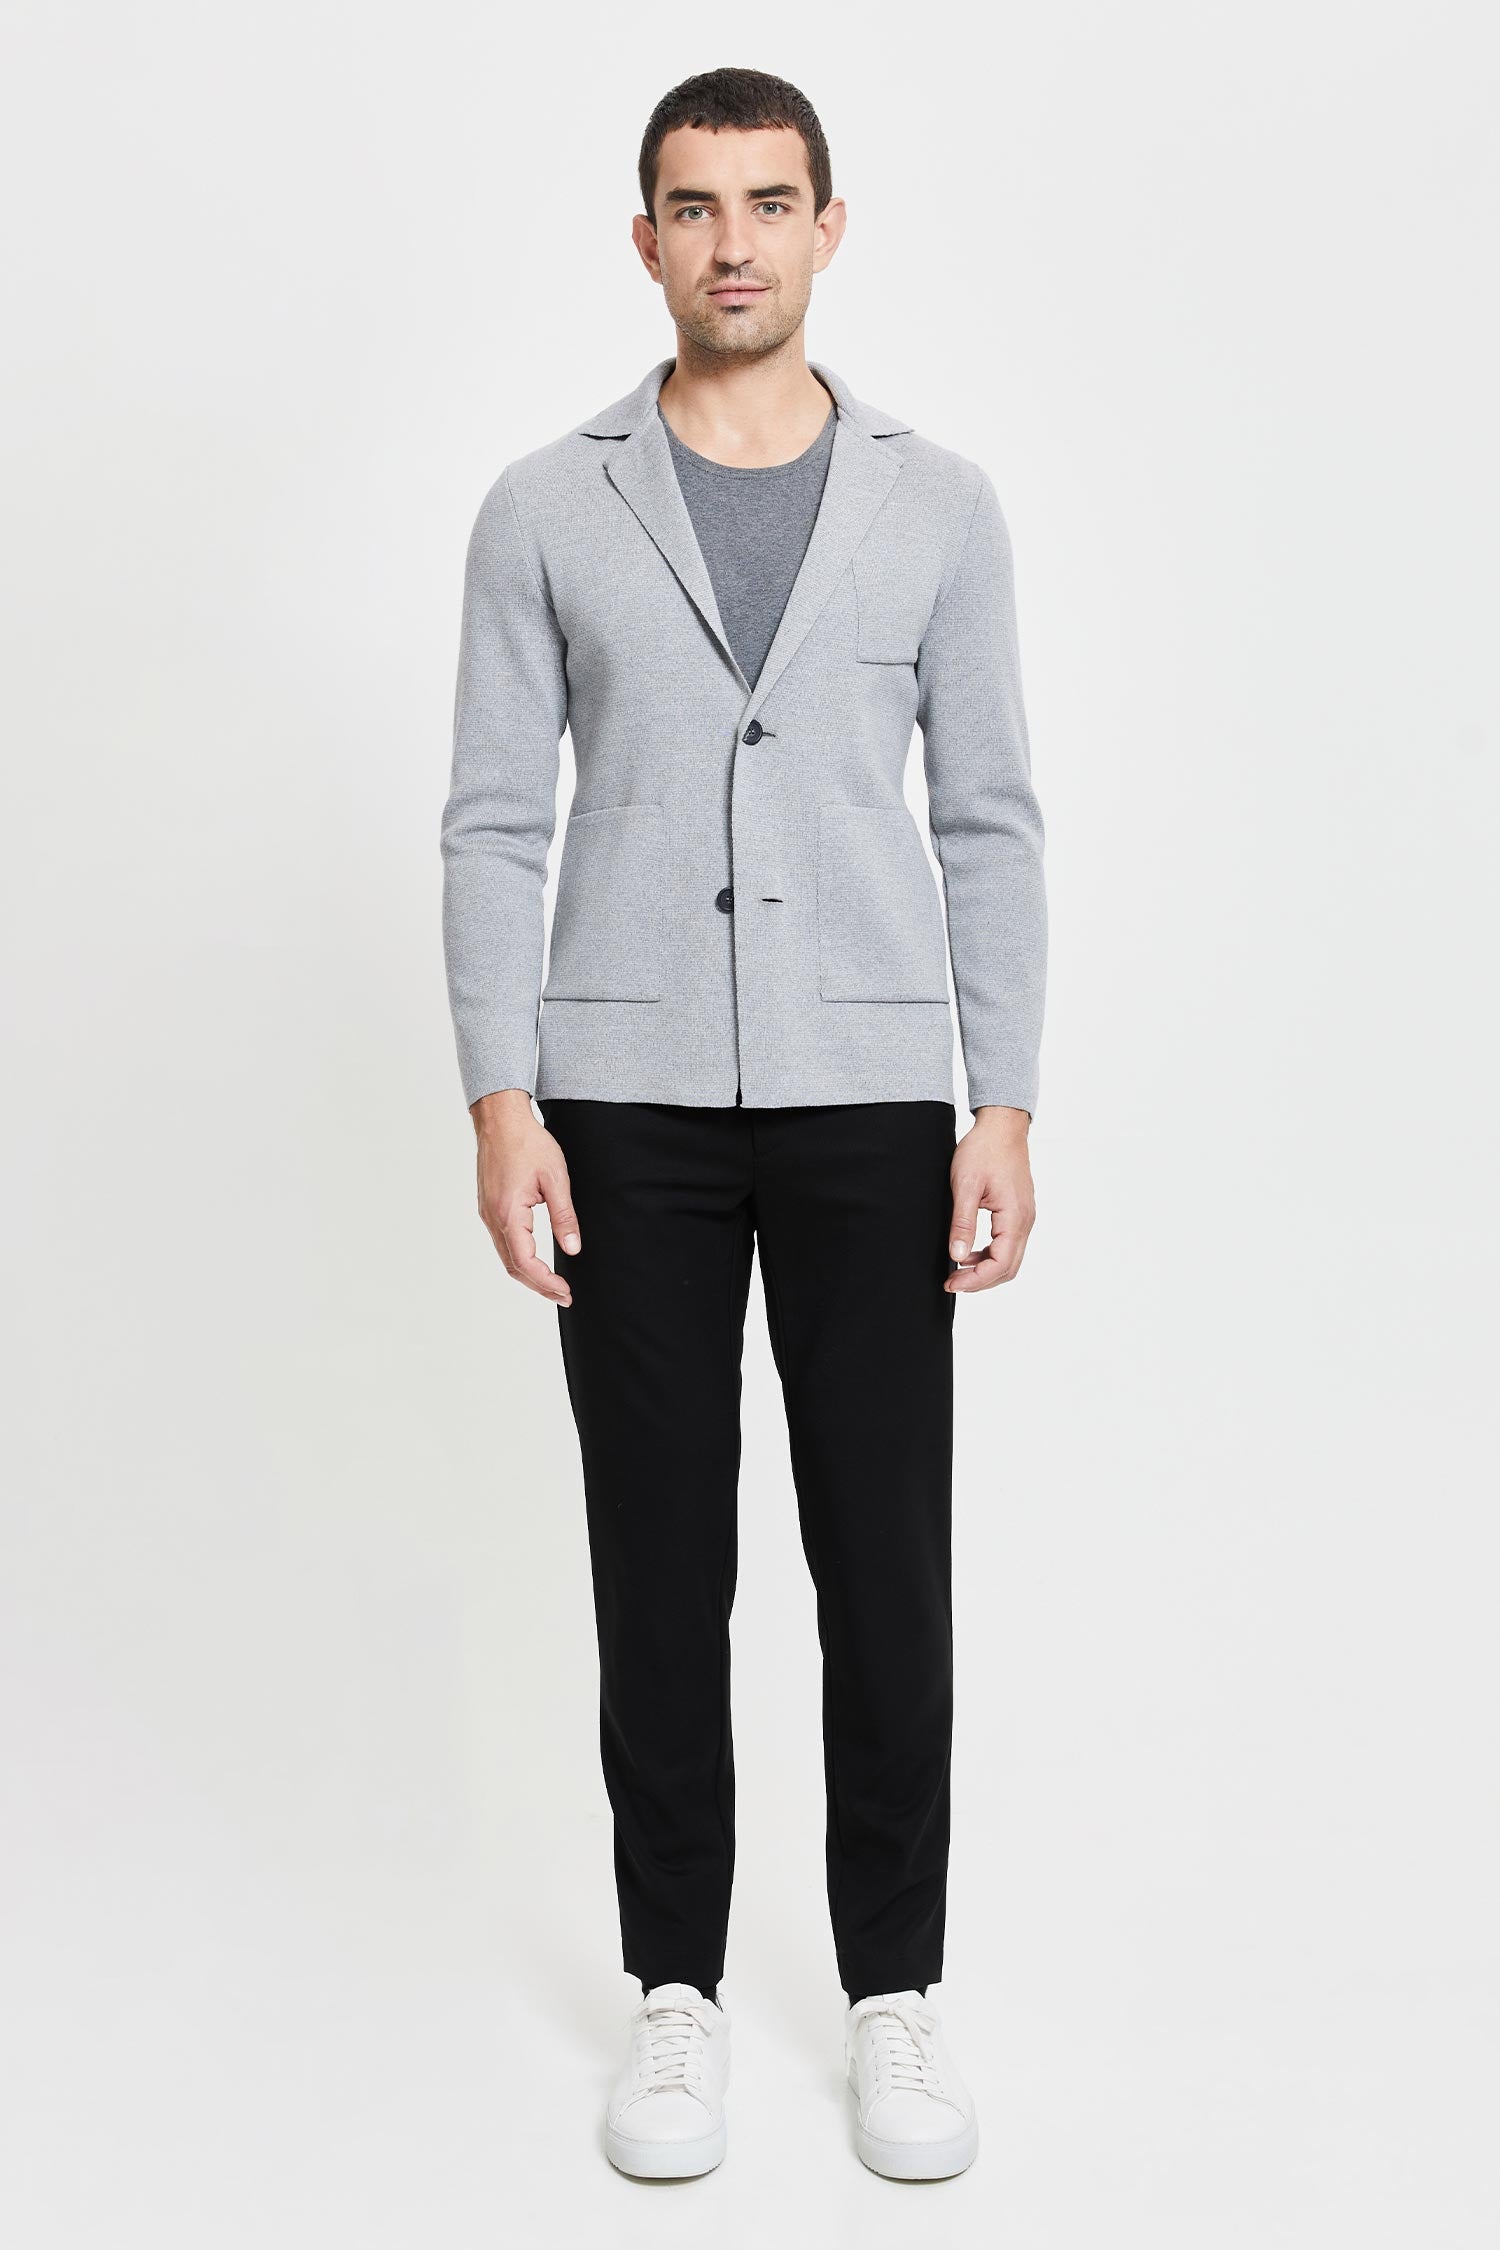 FRENN Elias sustainable premium quality extra fine merino wool cardigan jacket grey